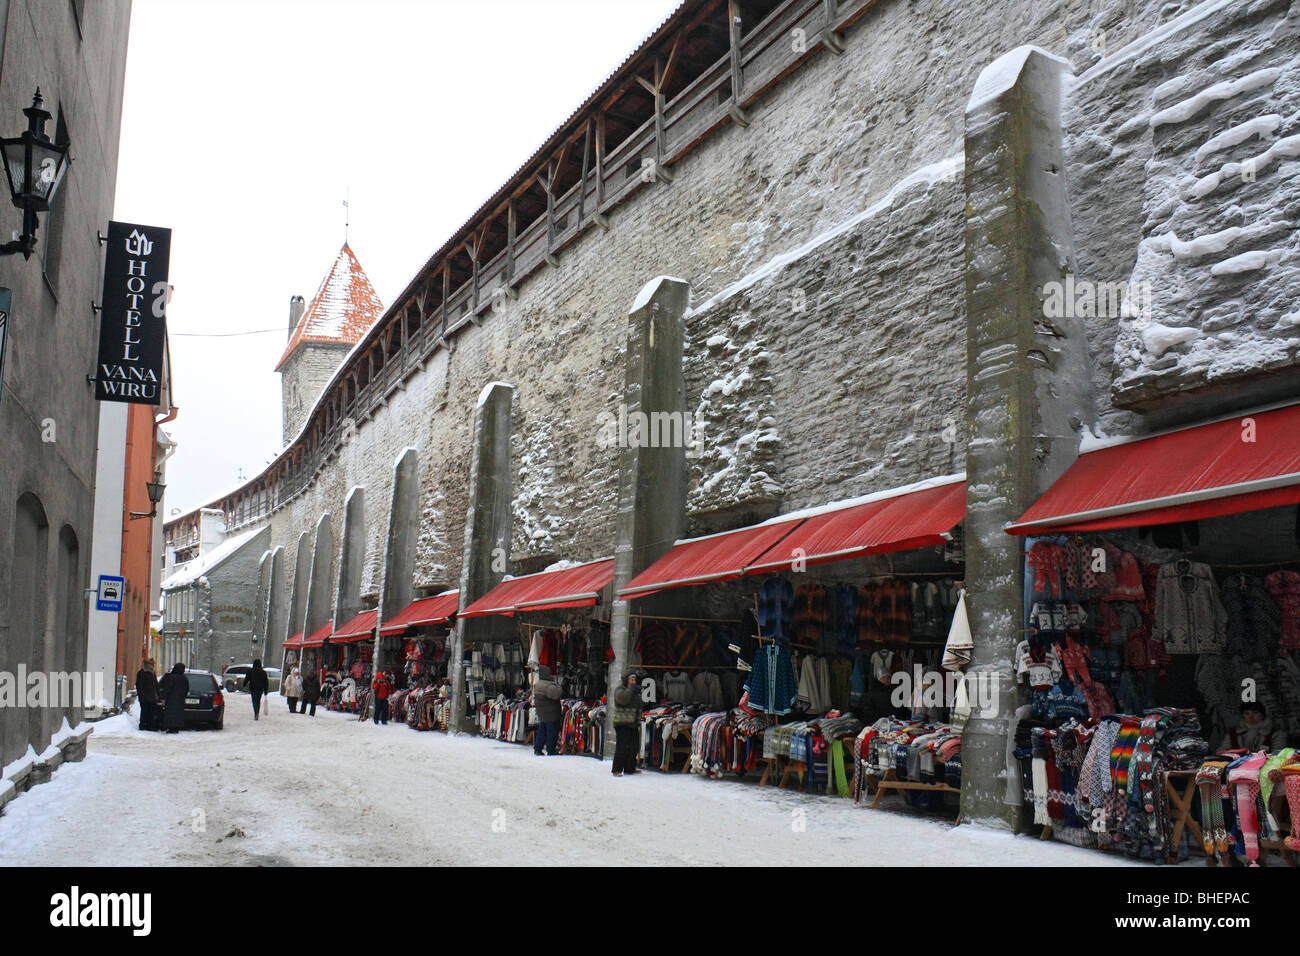 The markets stalls beneath the stone wall of the Old Town, Tallinn, Estonia. Stock Photo